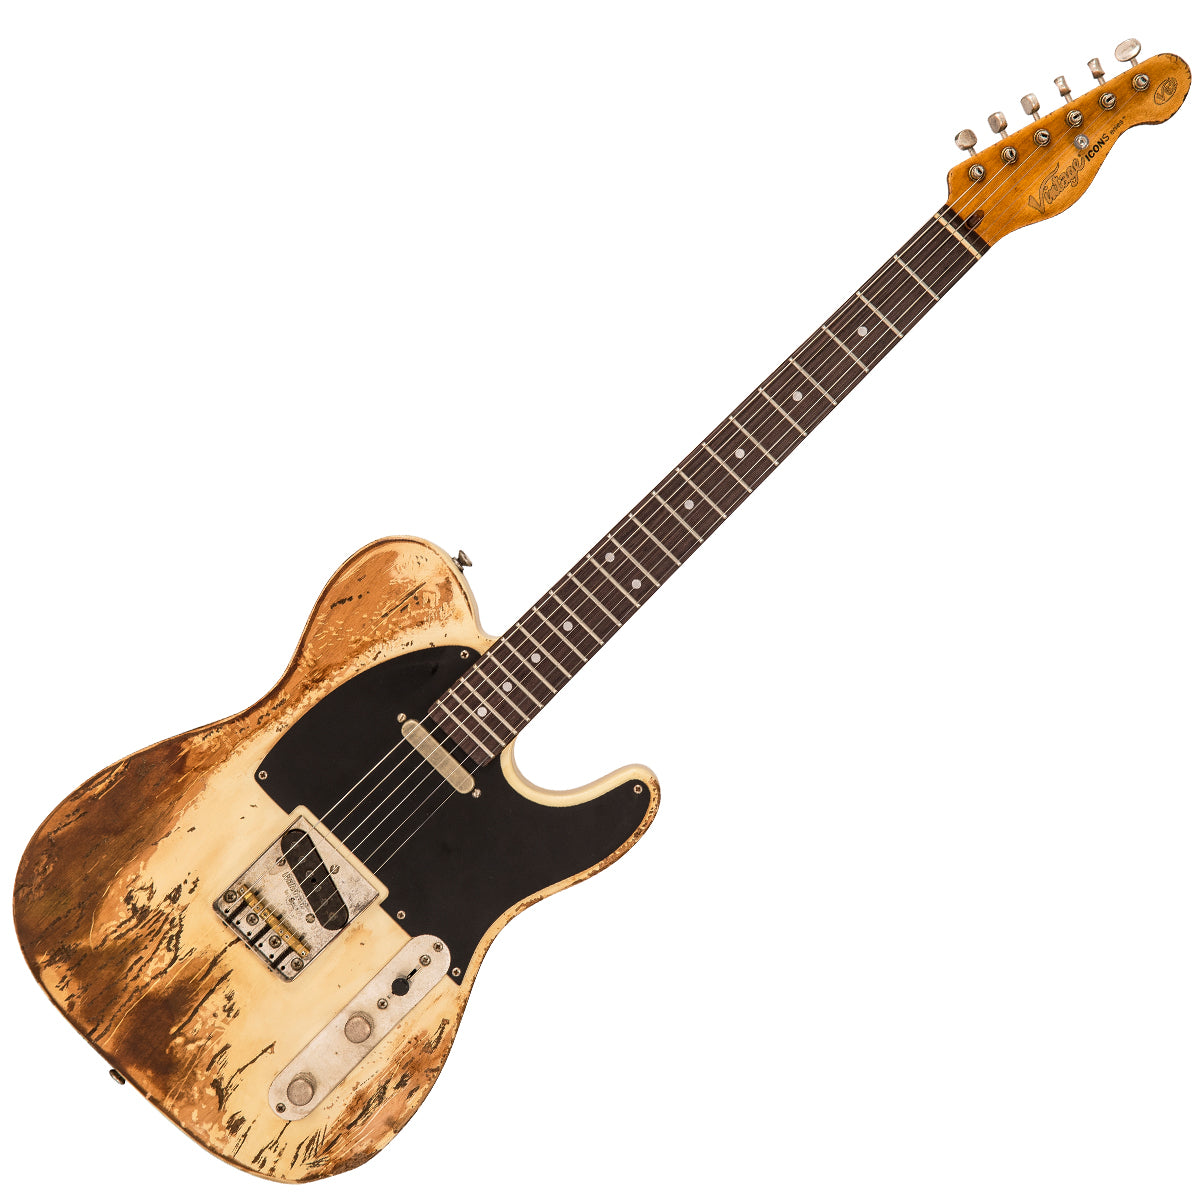 SOLD - Vintage V62 ProShop Unique ~ Blonde Heavy Relic, Electric Guitars for sale at Richards Guitars.